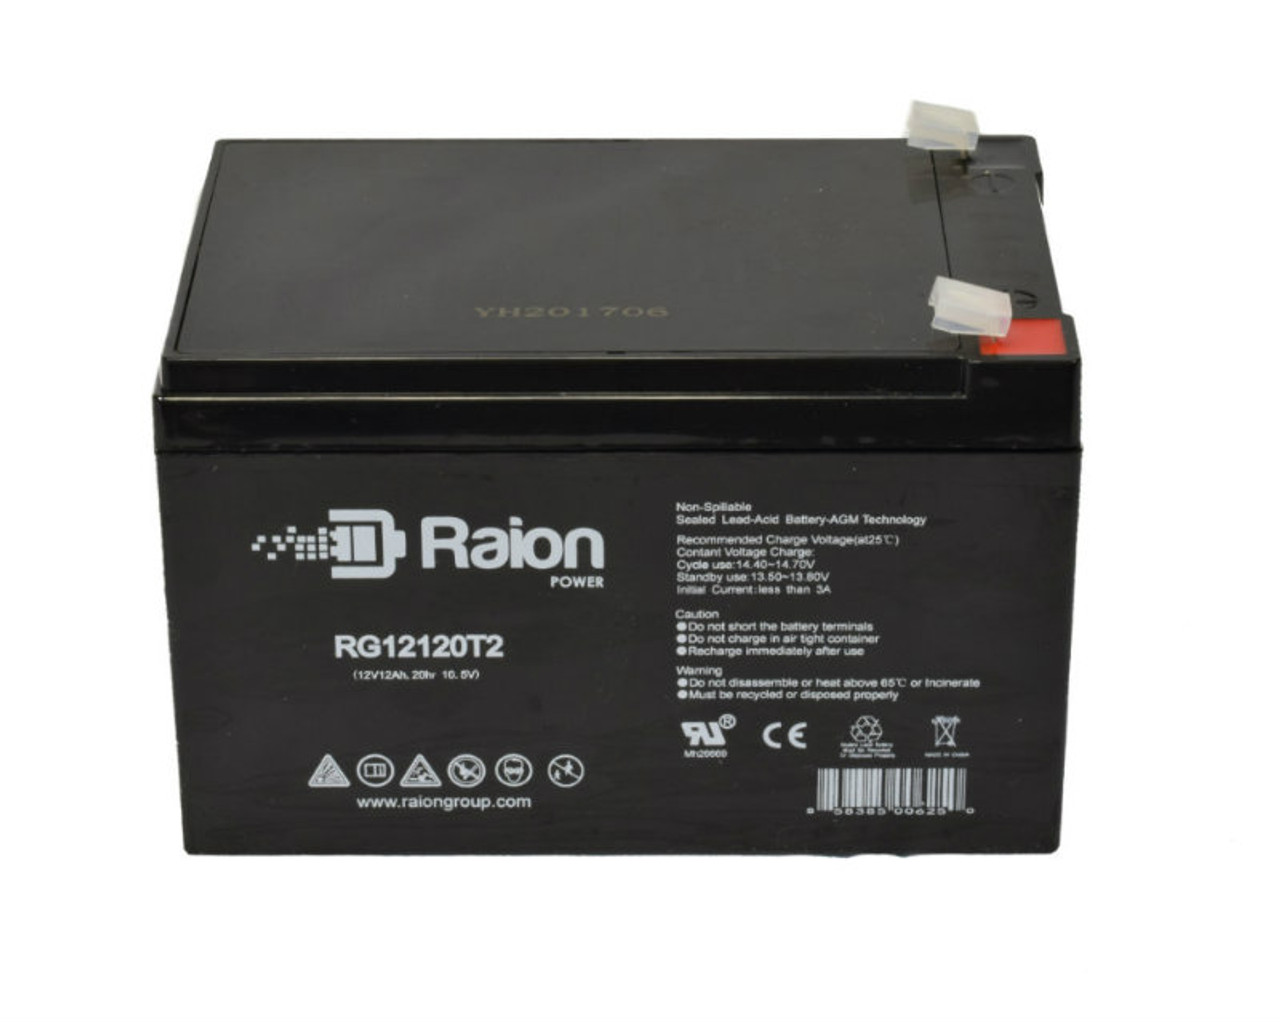 Raion Power RG12120T2 SLA Battery for Ecolo Cargo